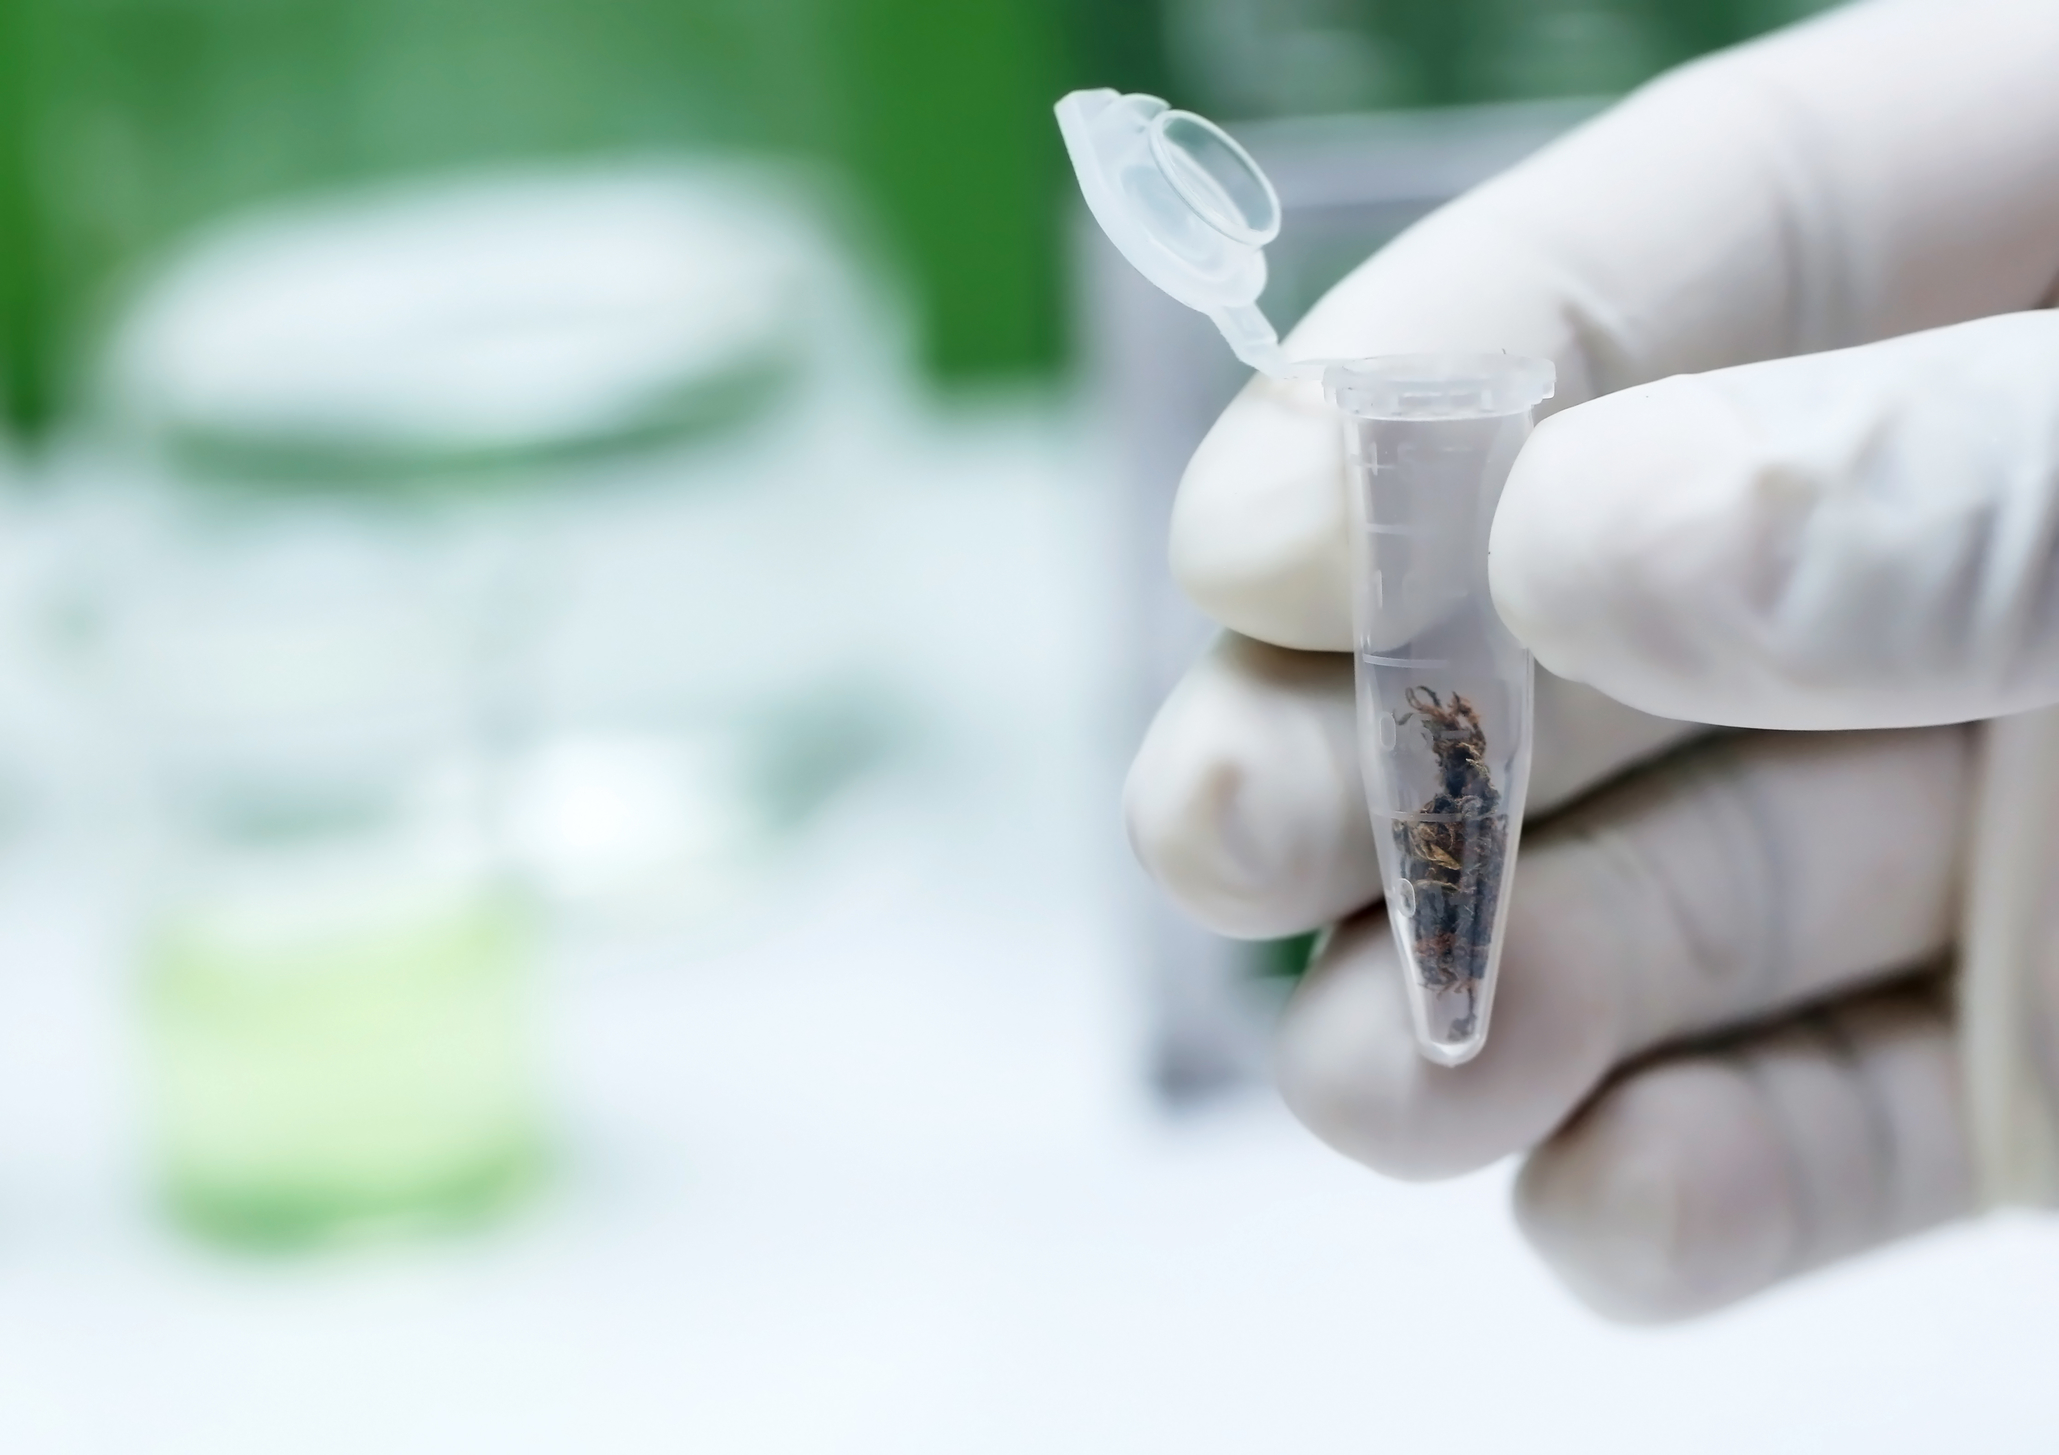 Oregon Marijuana Testing Lab Accreditation Program on ‘Precipice of Collapse’